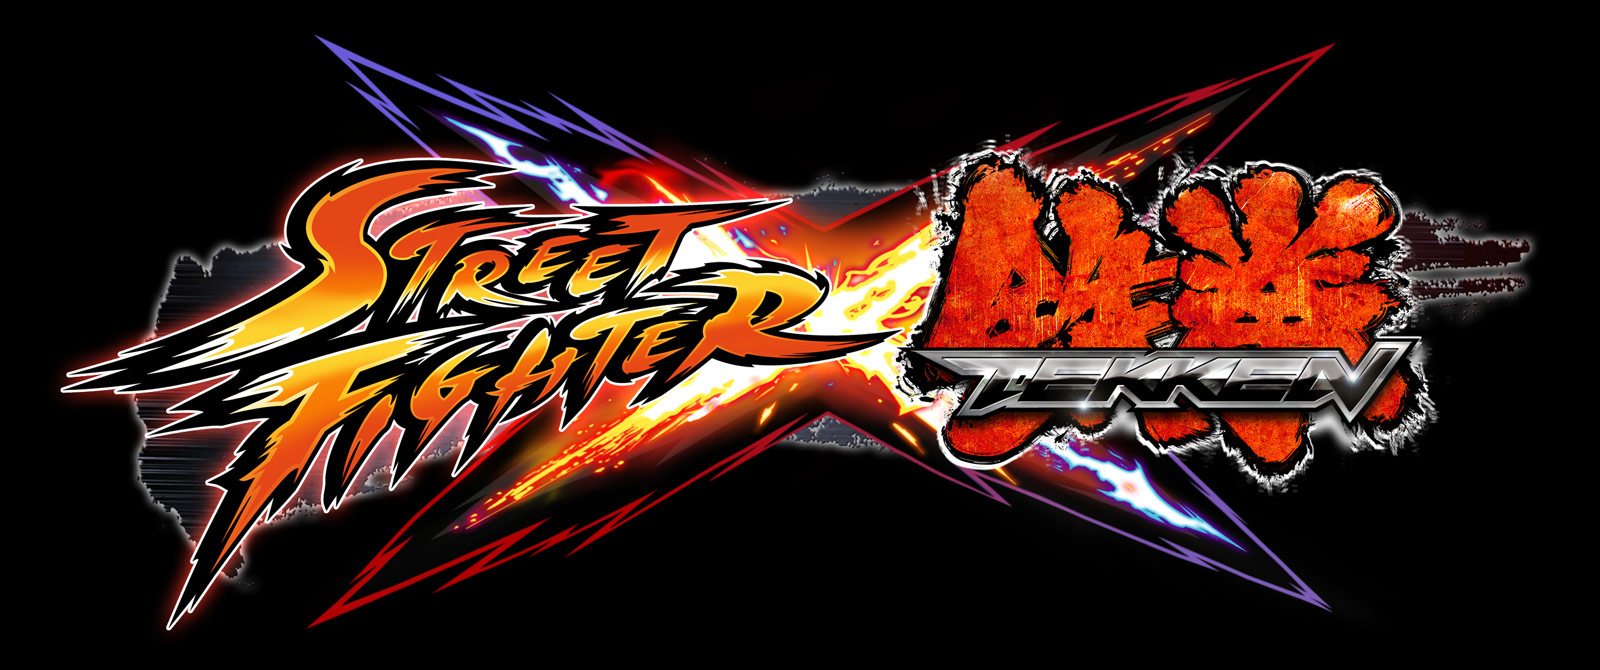 Street Fighter X Tekken #6